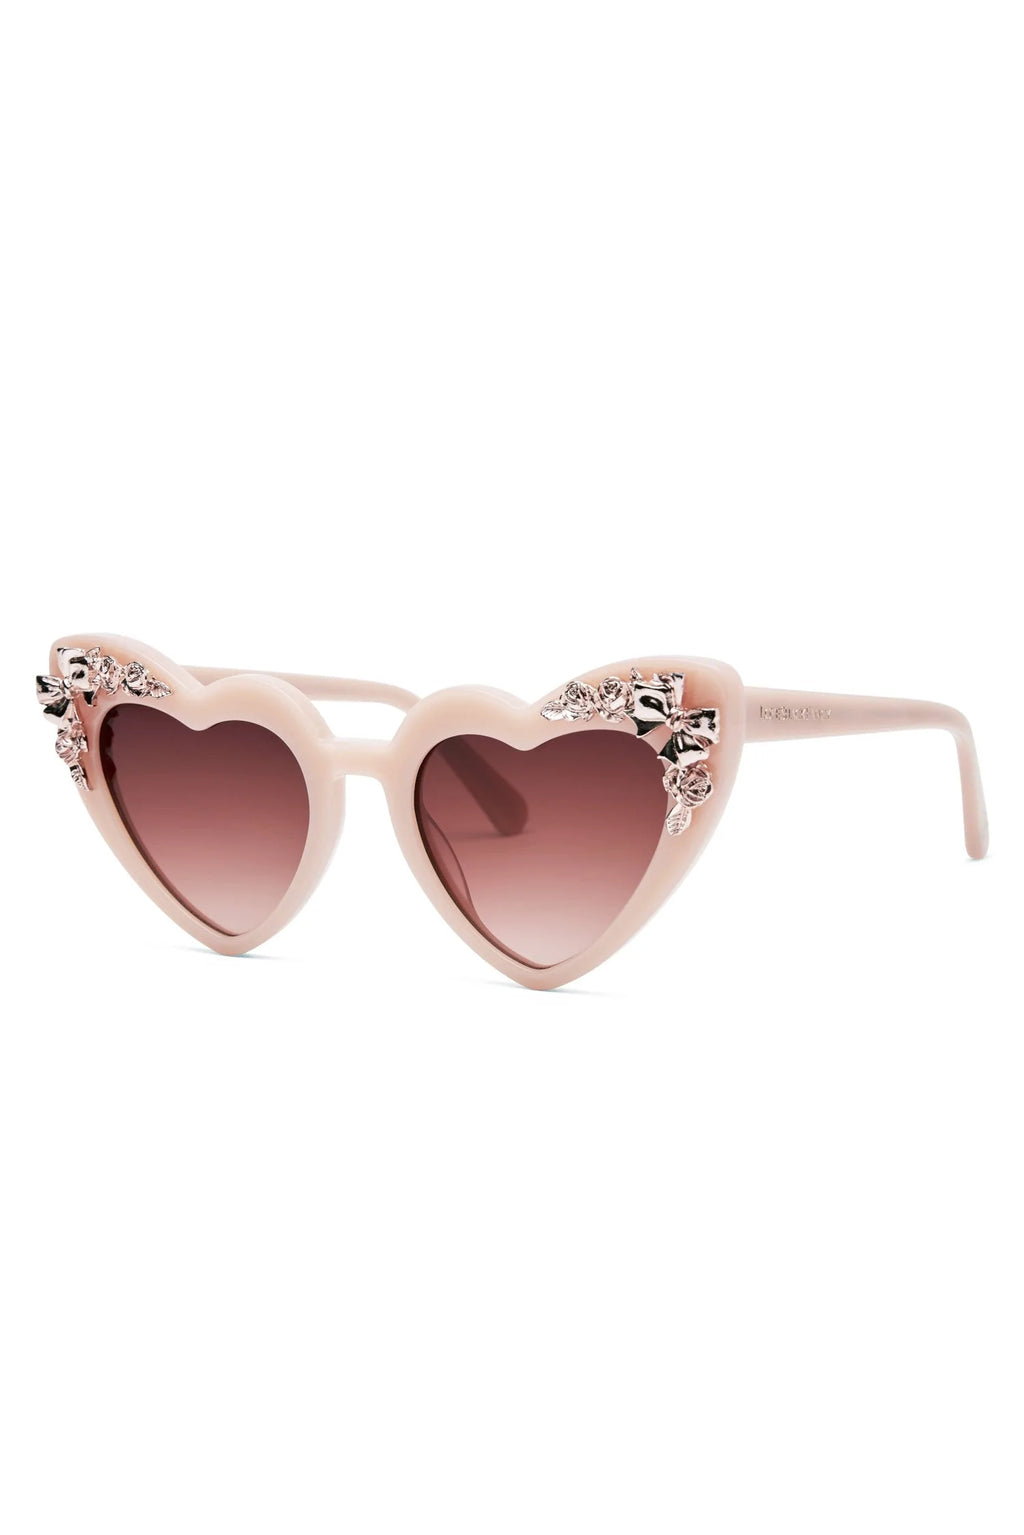 Loveshackfancy Amalia Sunglasses in Golden Peach – Cattivo